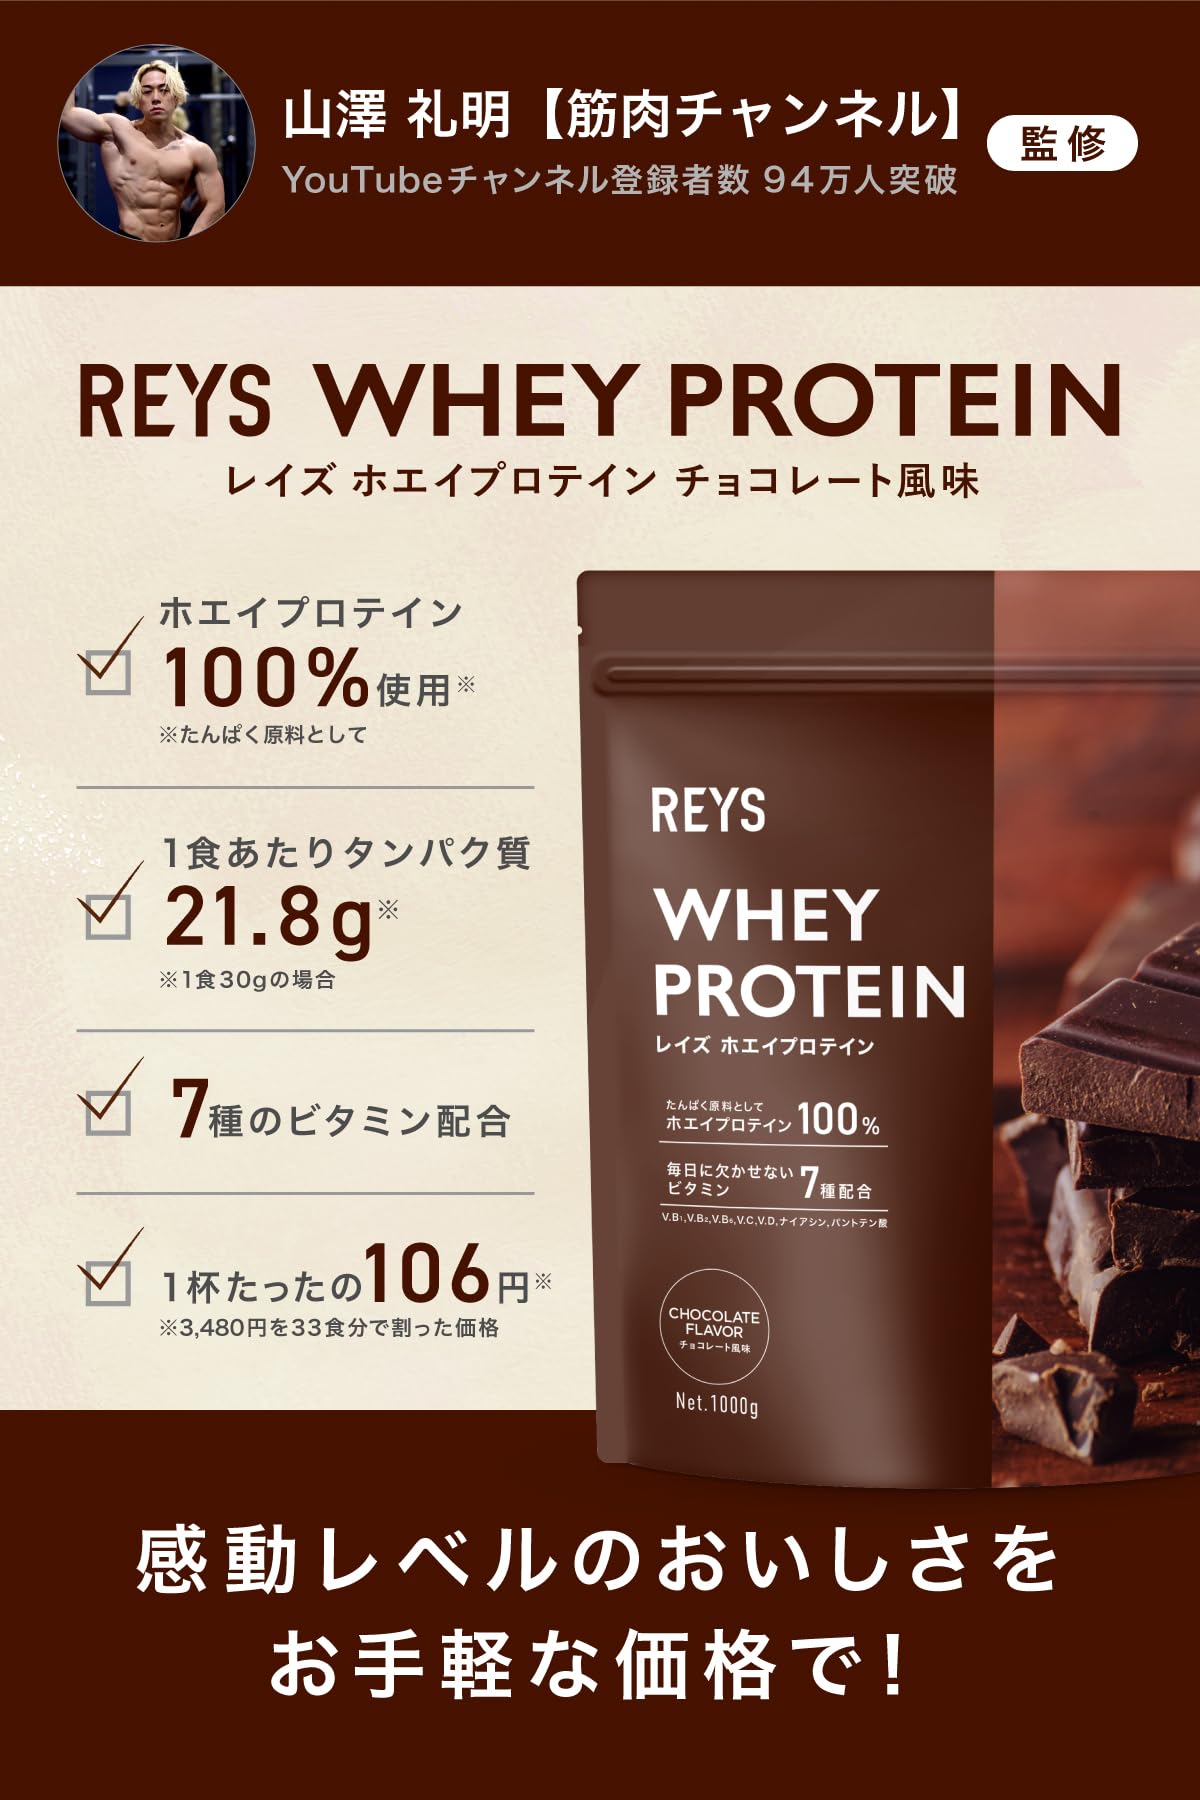 REYS Rays порошок cывороточный протеин гора .. Akira ..1kg внутренний производство витамин 7 вид сочетание WPC протеин ..... cывороточный протеин шоколад 